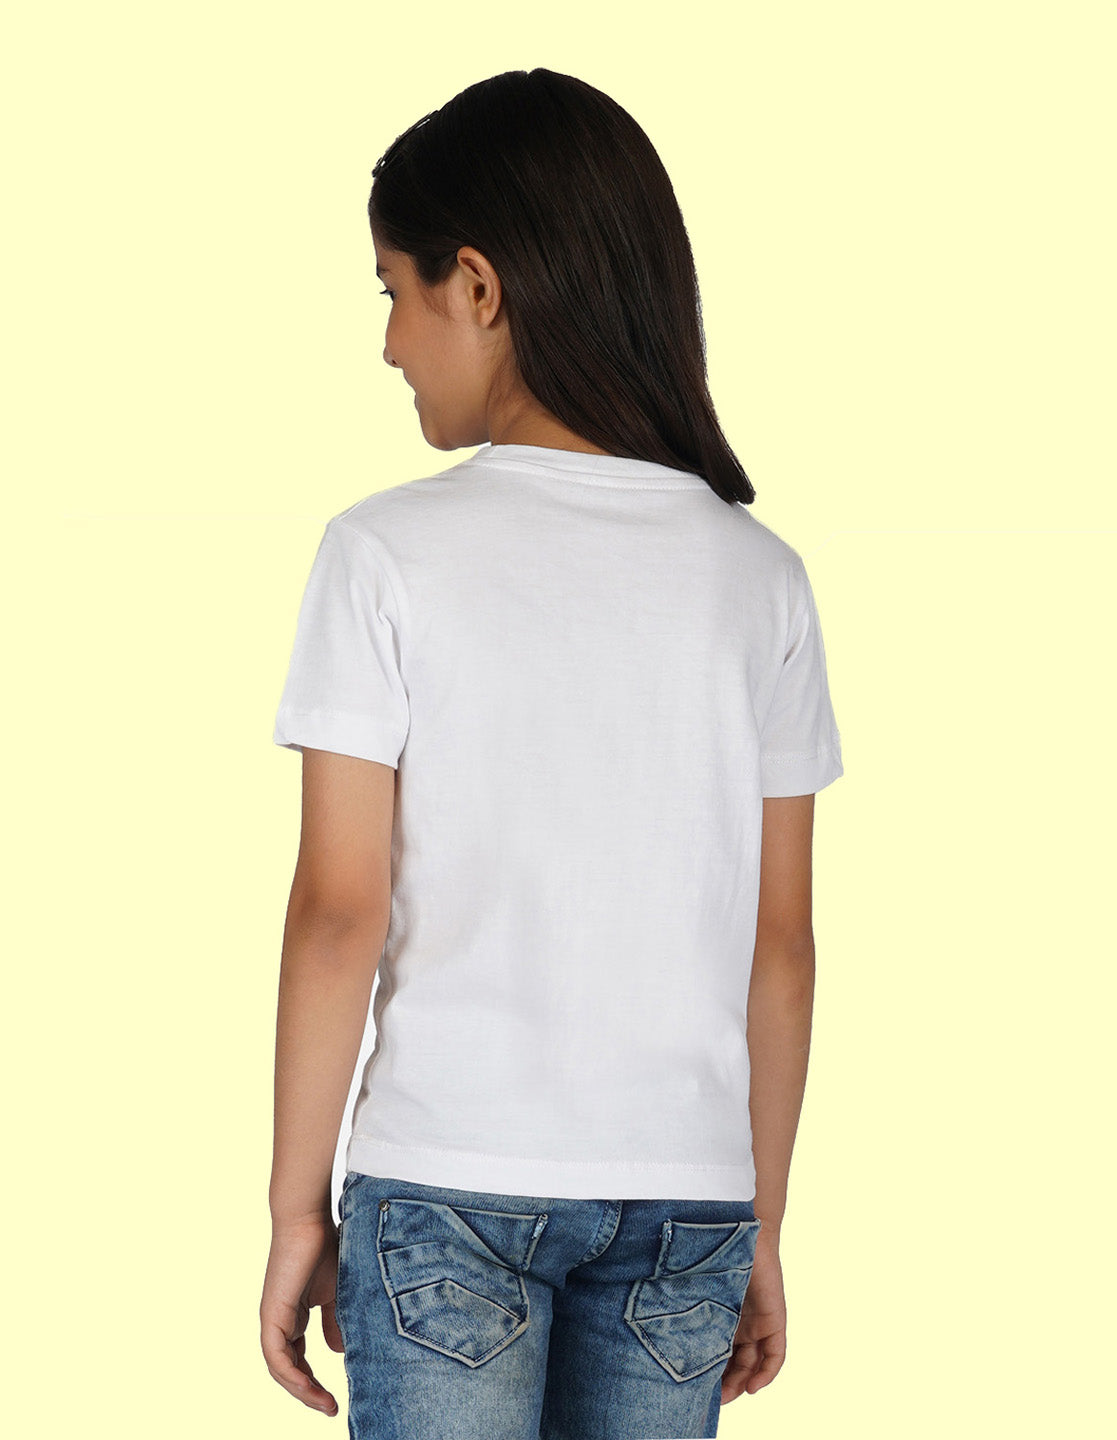 Nusyl Girls Half Sleeves White Teddy bear printed T-shirt